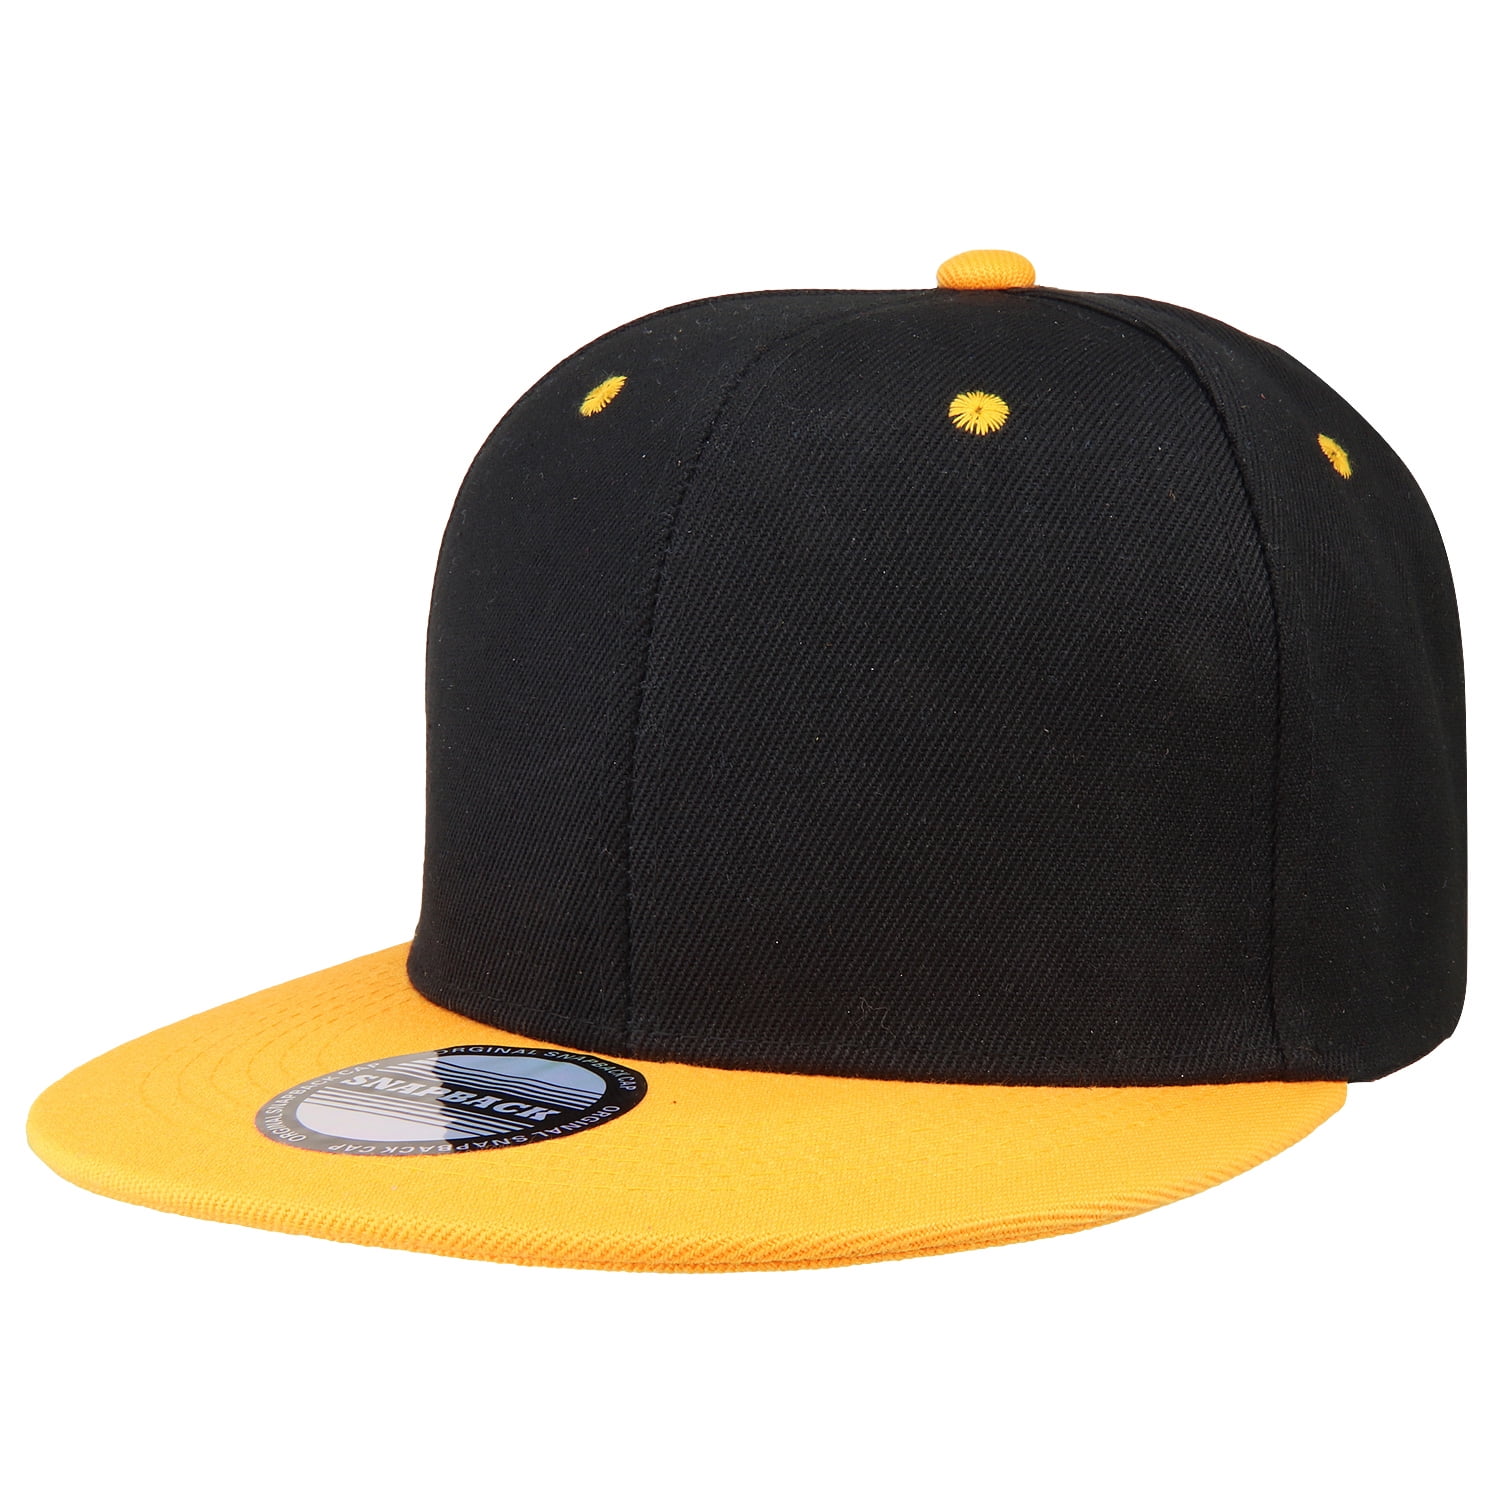 Classic Snapback Hat Cap Hip Hop Style Flat Bill Blank Solid Color Adjustable Size BlackGold